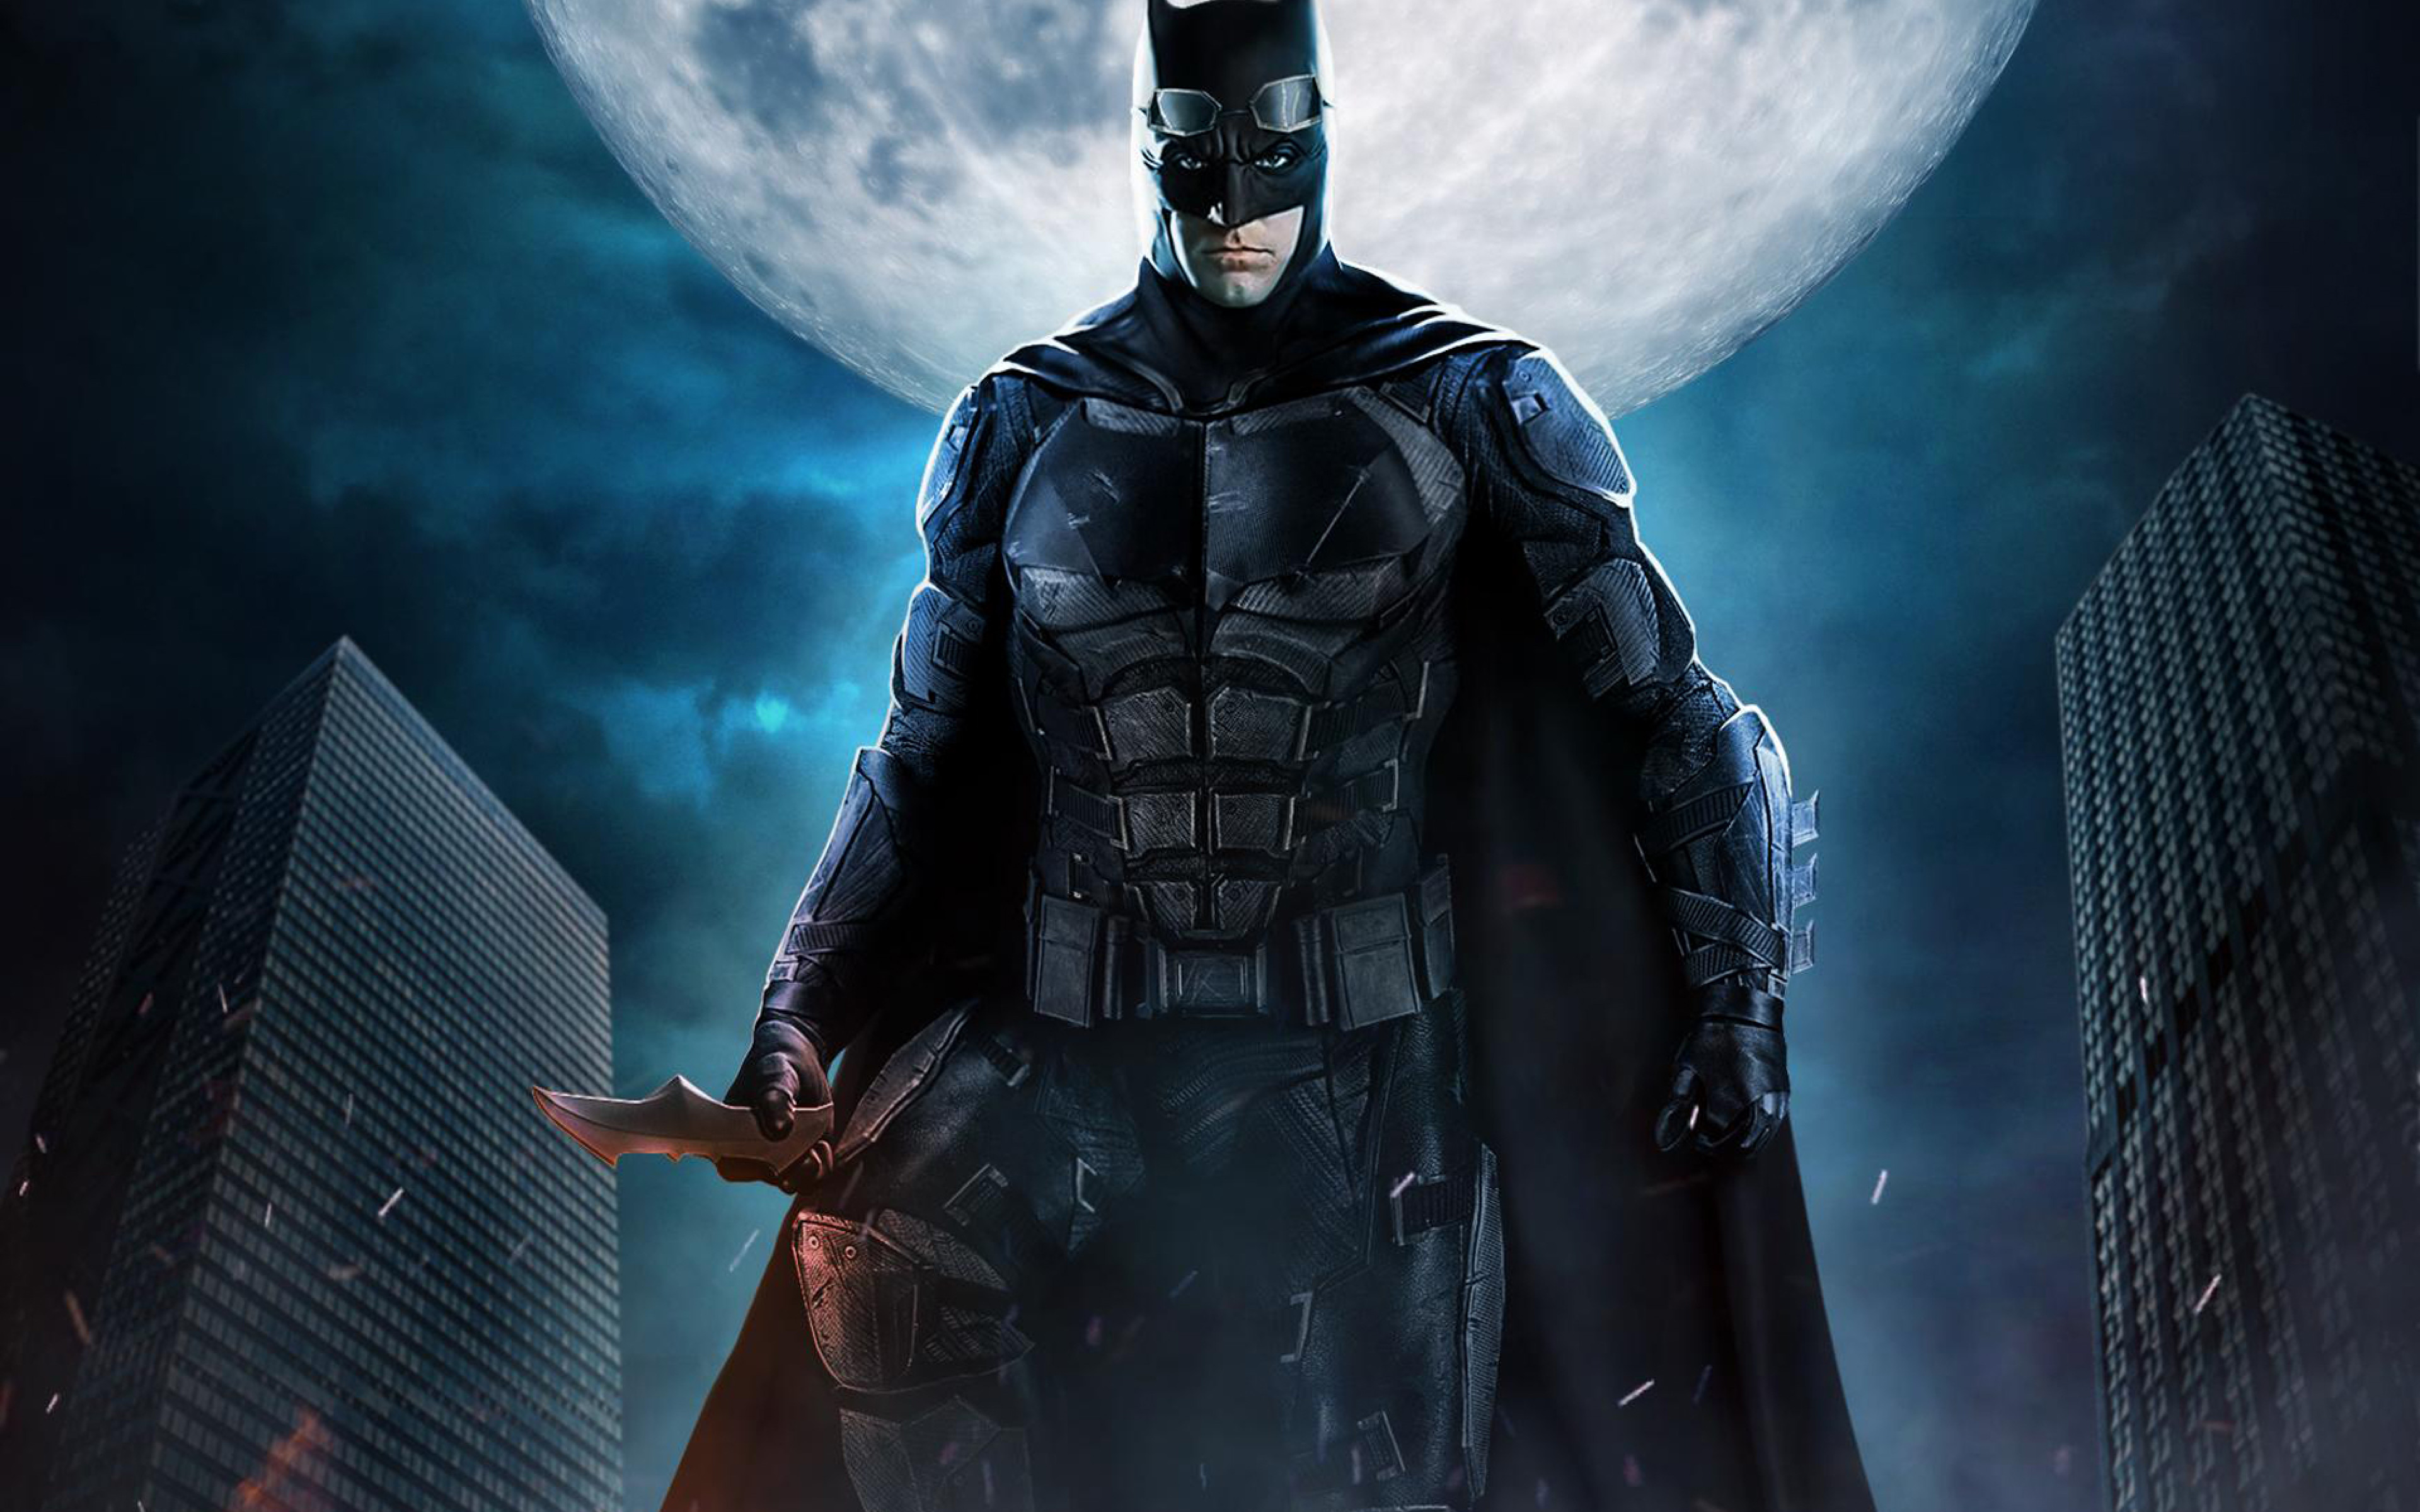 justice league batman wallpaper,batman,superhero,action adventure game,fictional character,movie